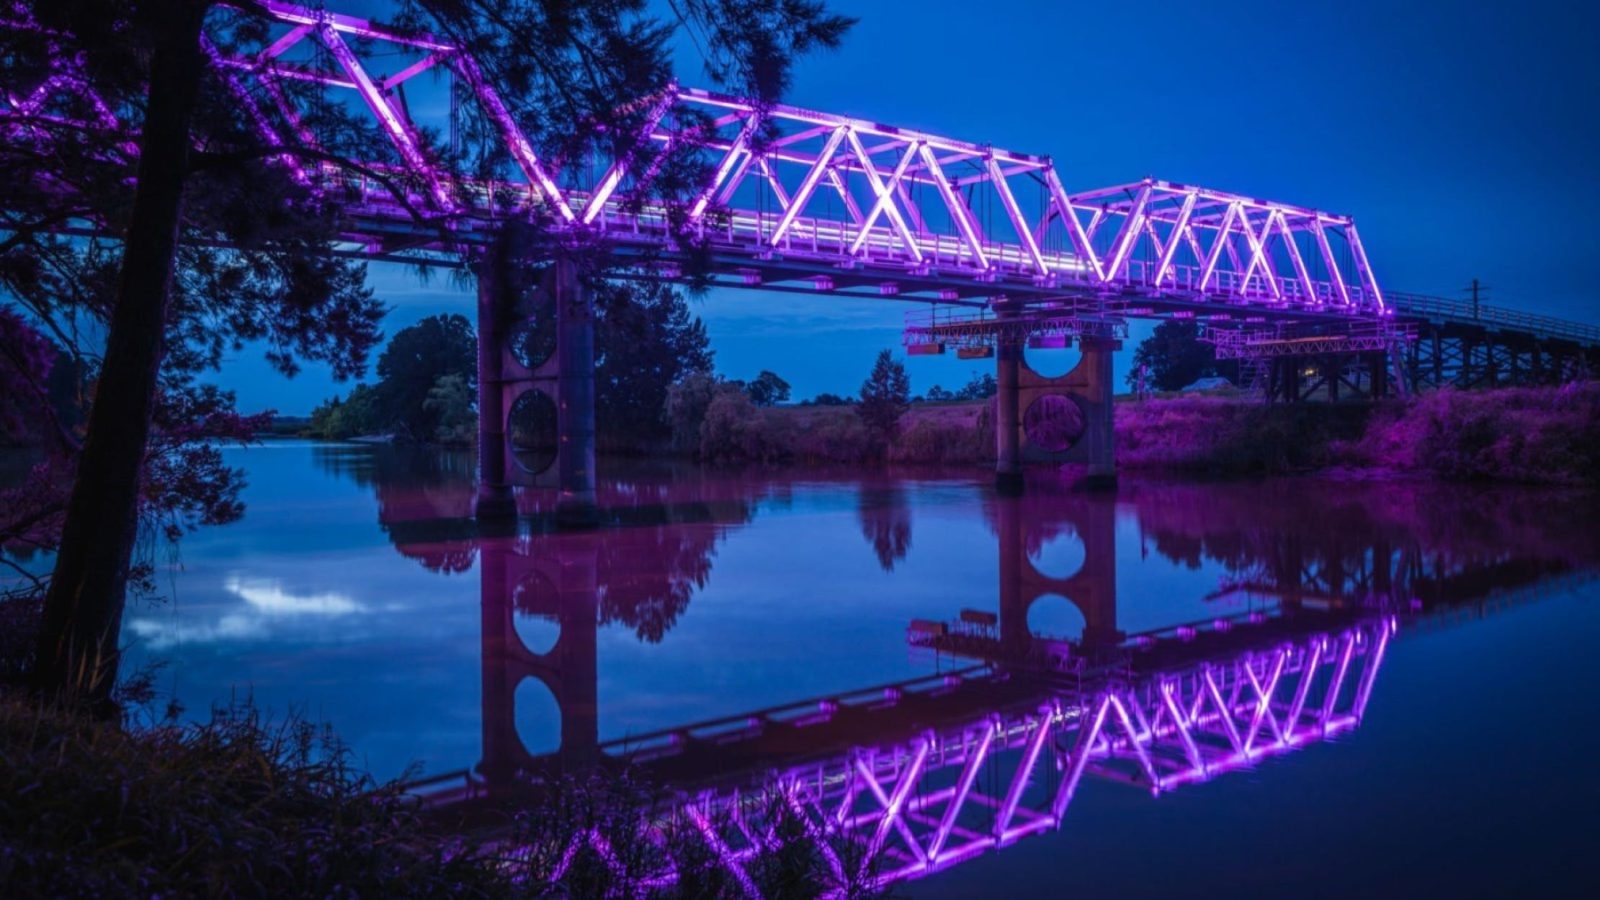 Morpeth Bridge lit up